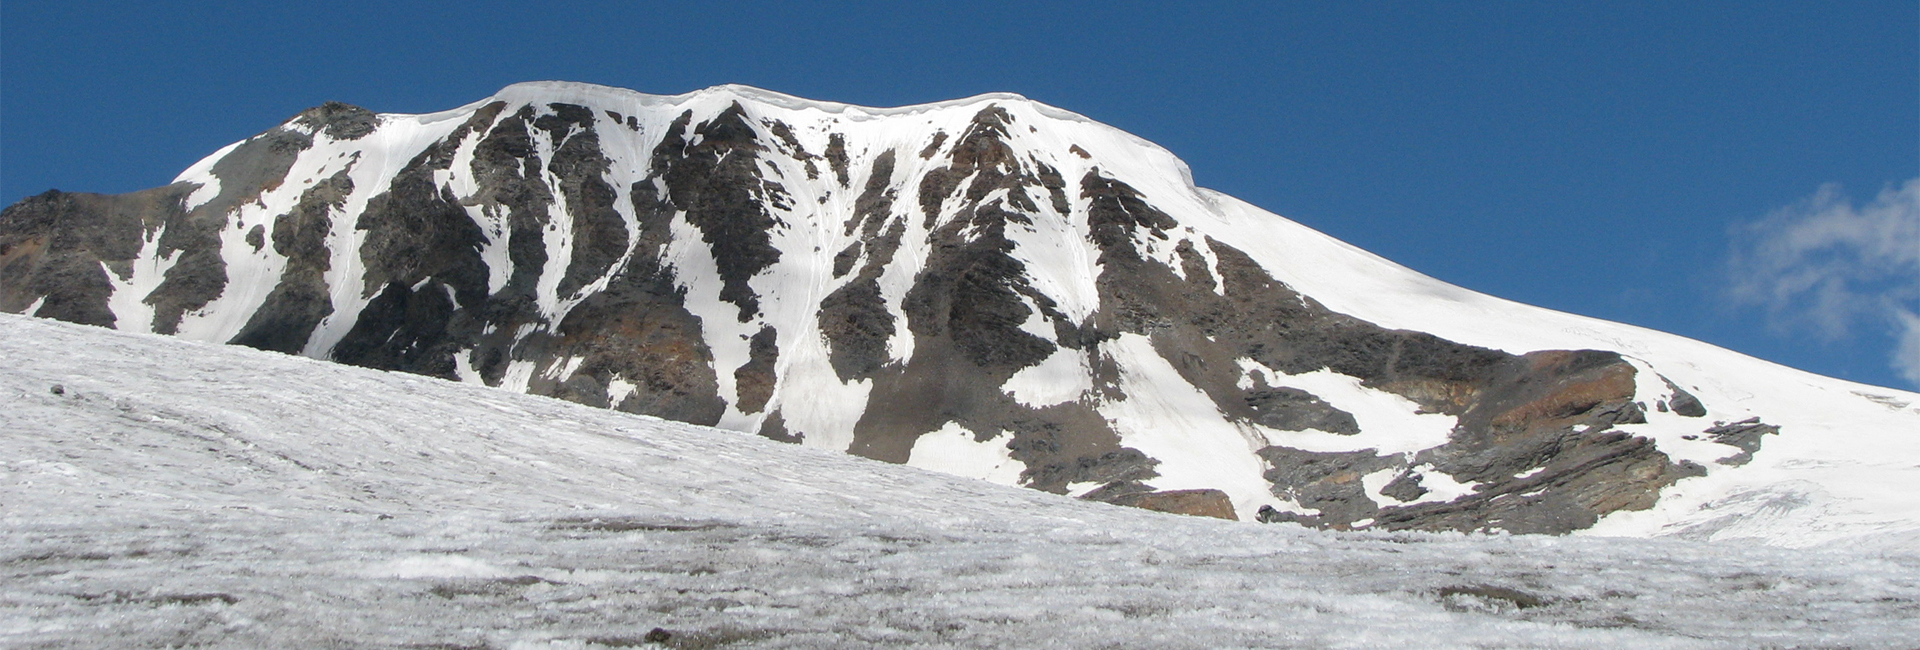 Mt. Yunam Expedition